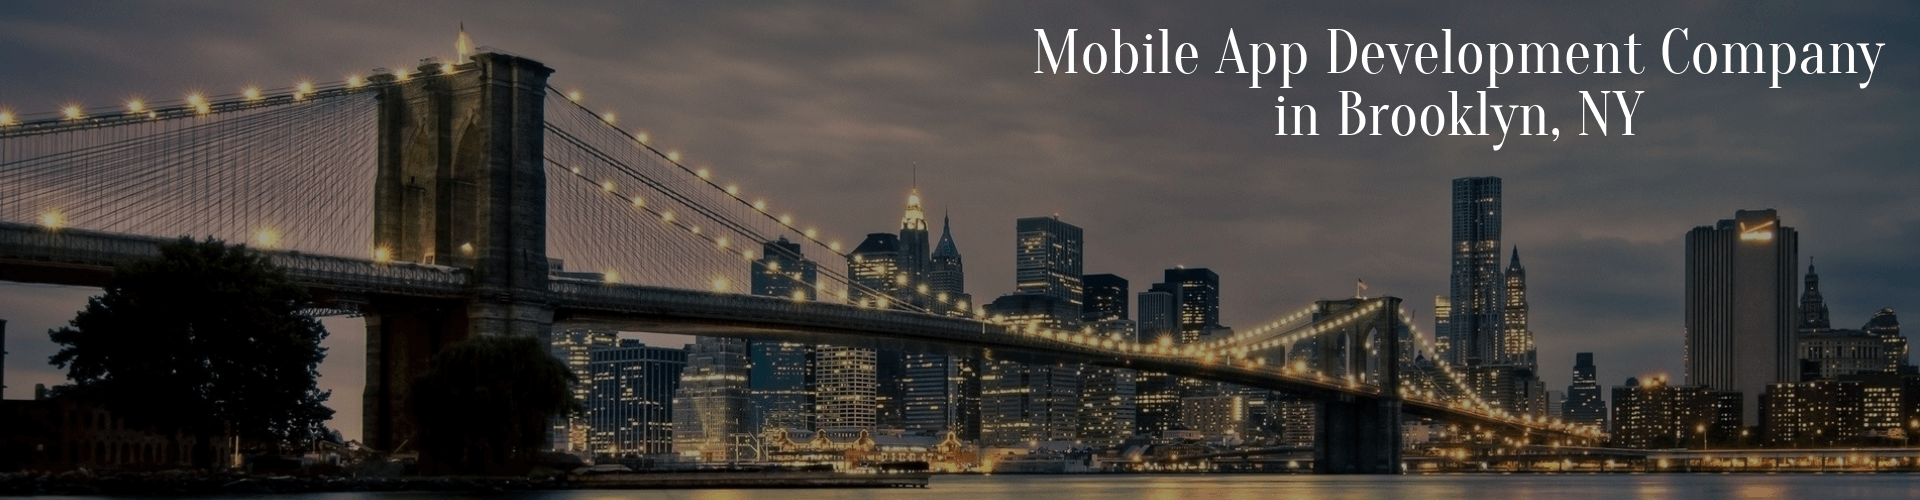 mobile app development company in brooklyn